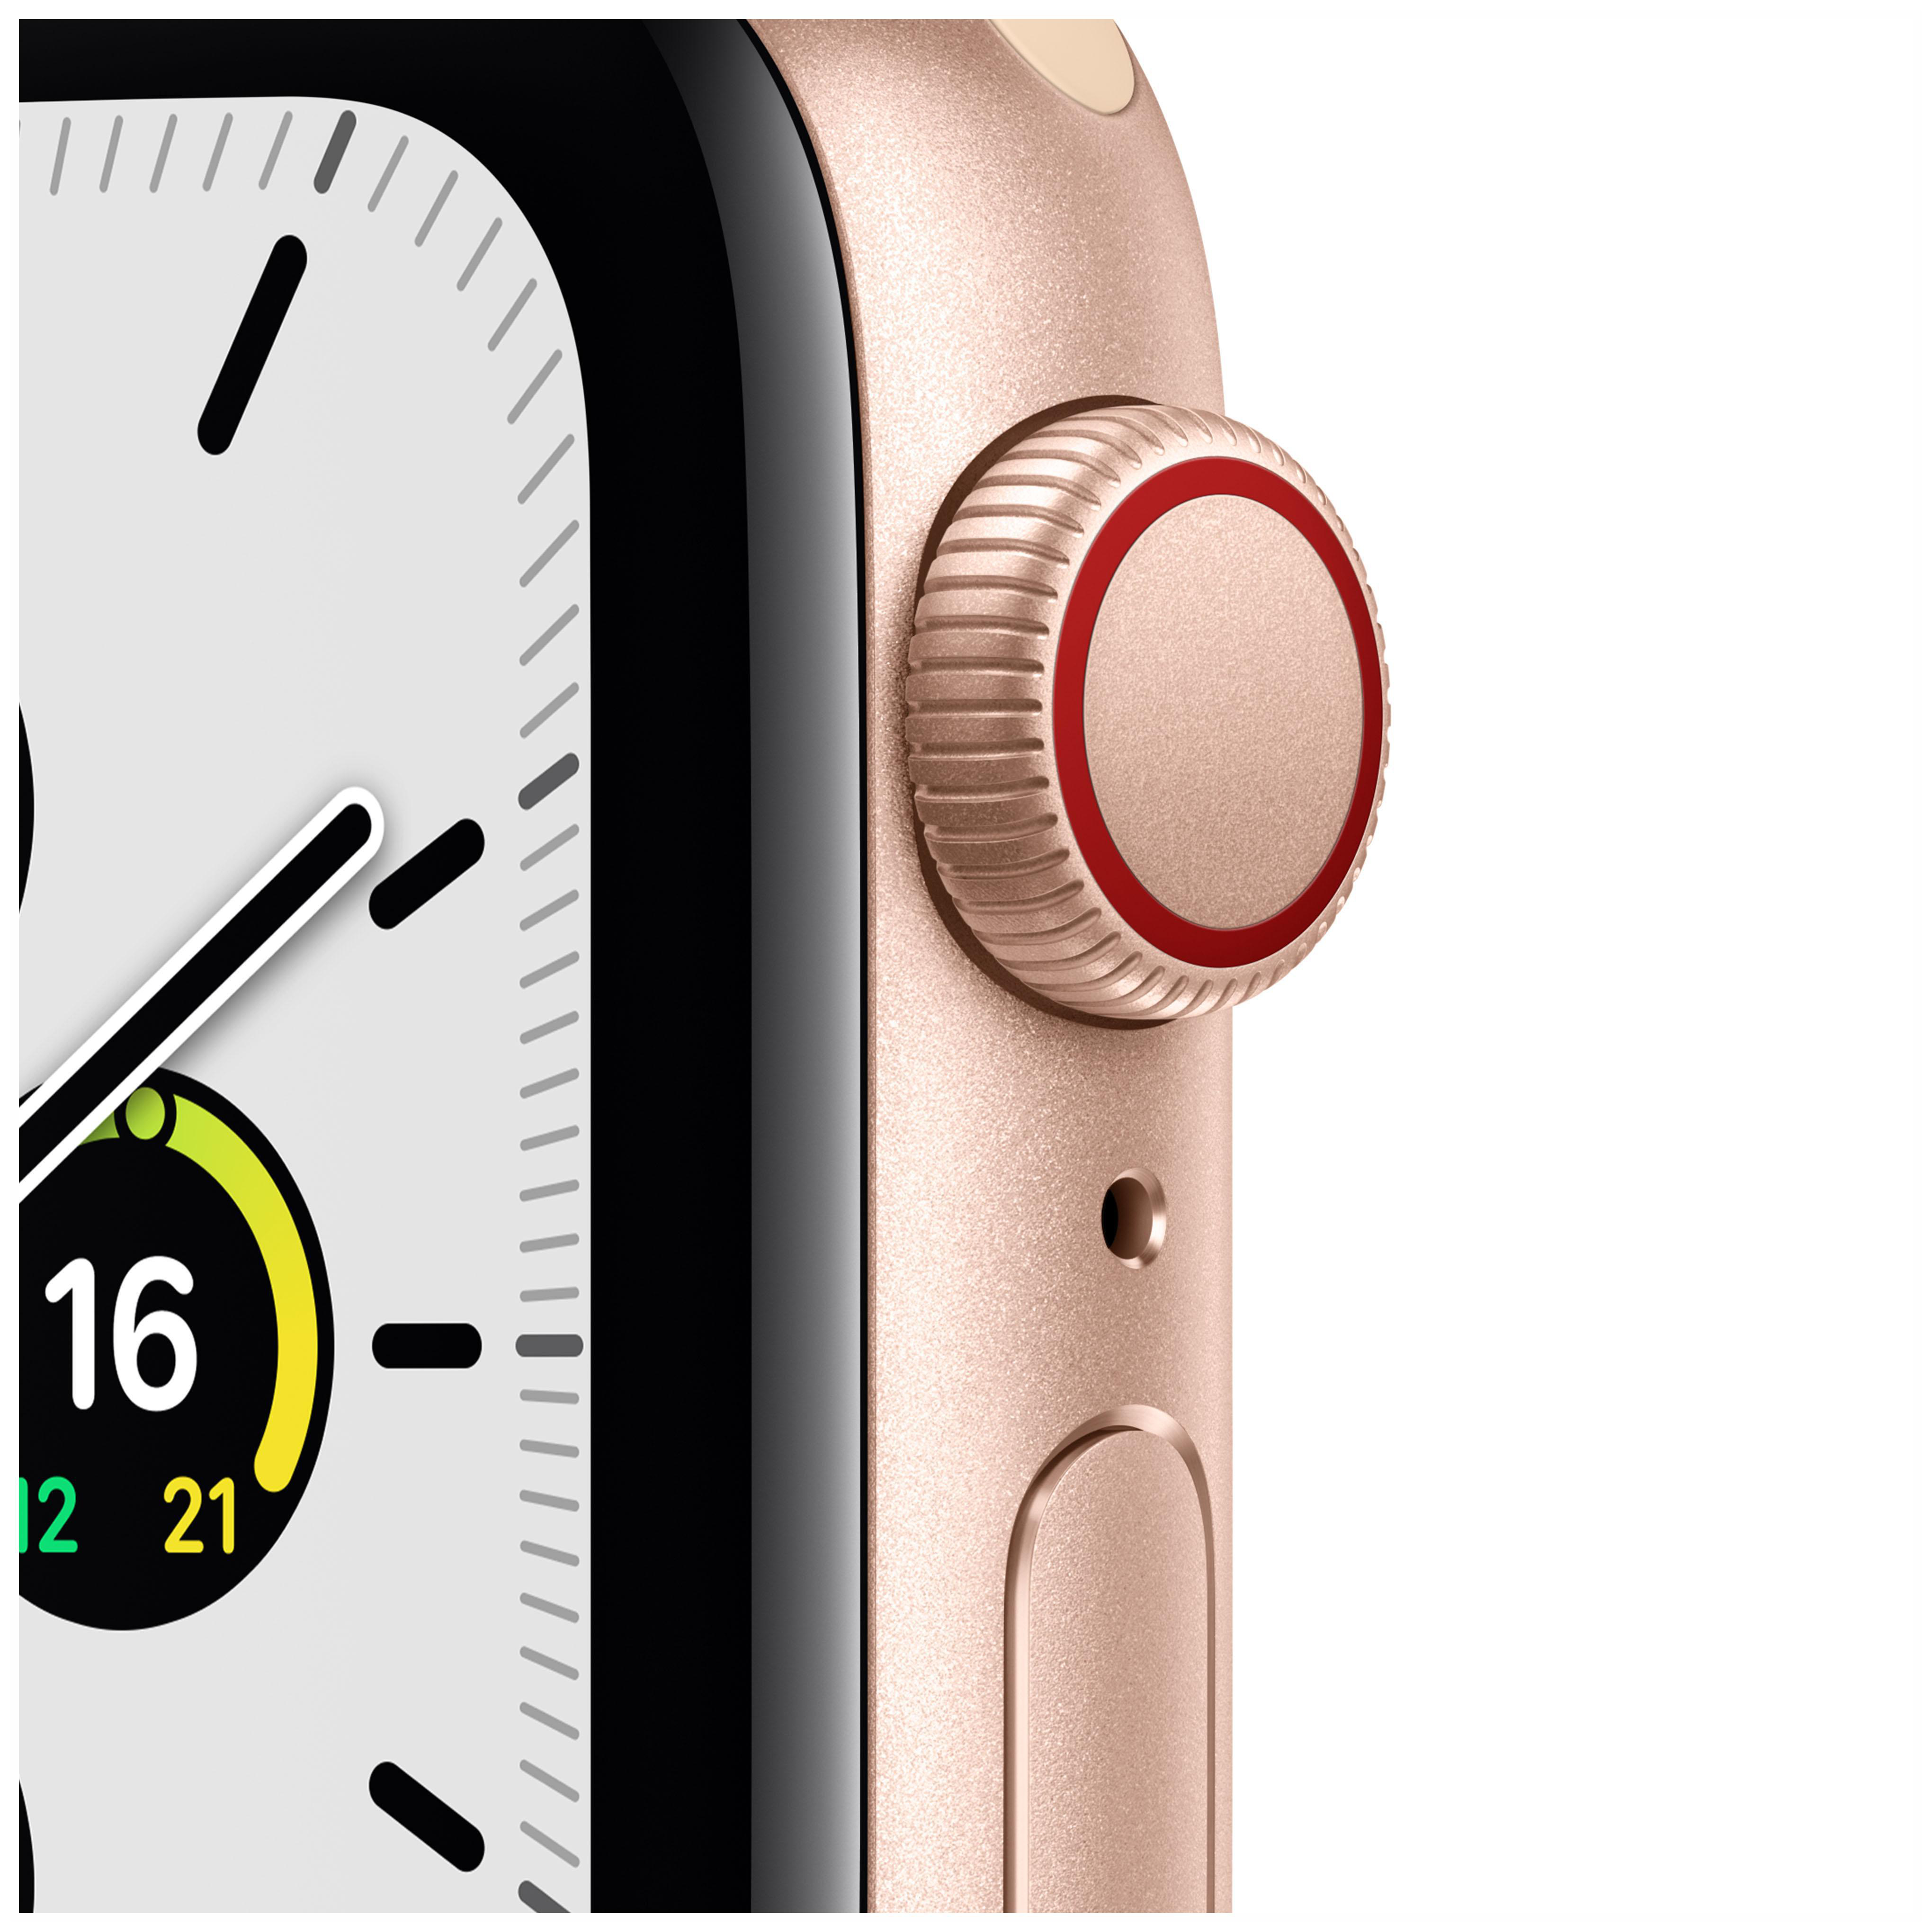 APPLE Watch Nylon, Indischgelb/Weiß, Gold (GPS - Cellular) Smartwatch 40mm 130 + Aluminium 200 Gehäuse: SE mm, Armband